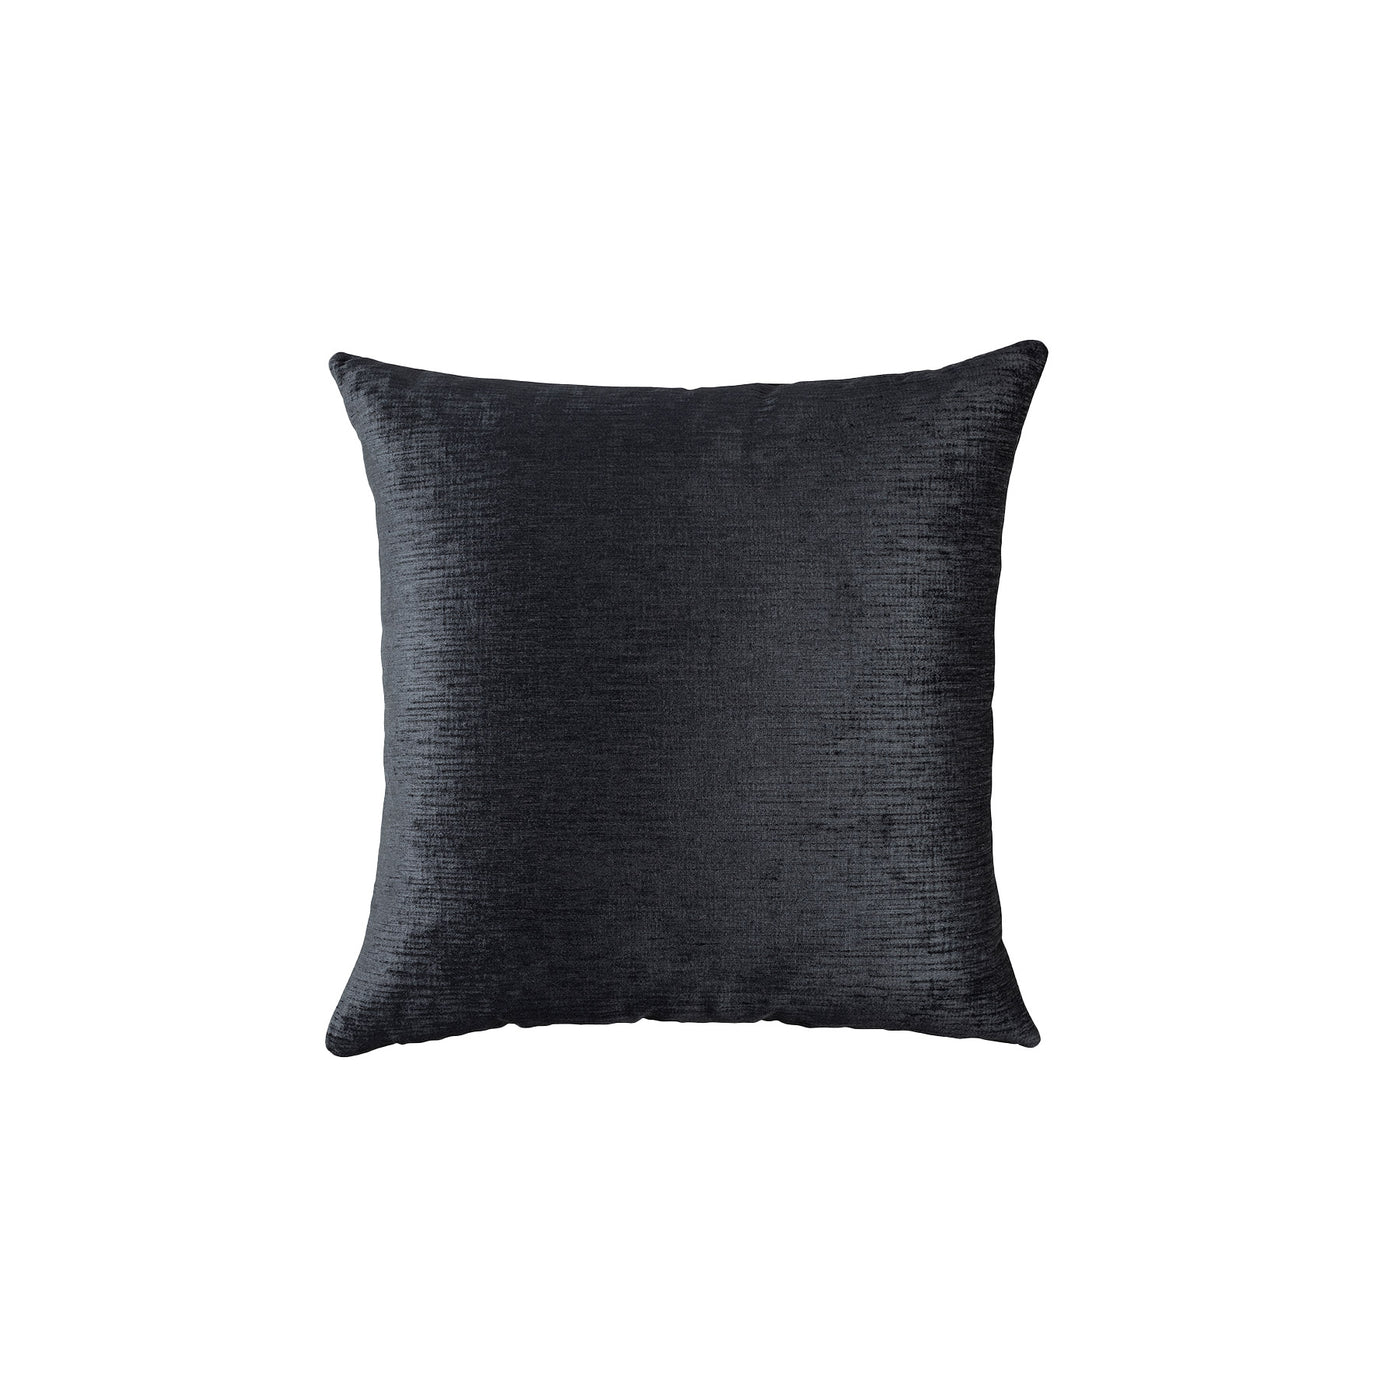 Ava Charcoal Euro Pillow (26x26)